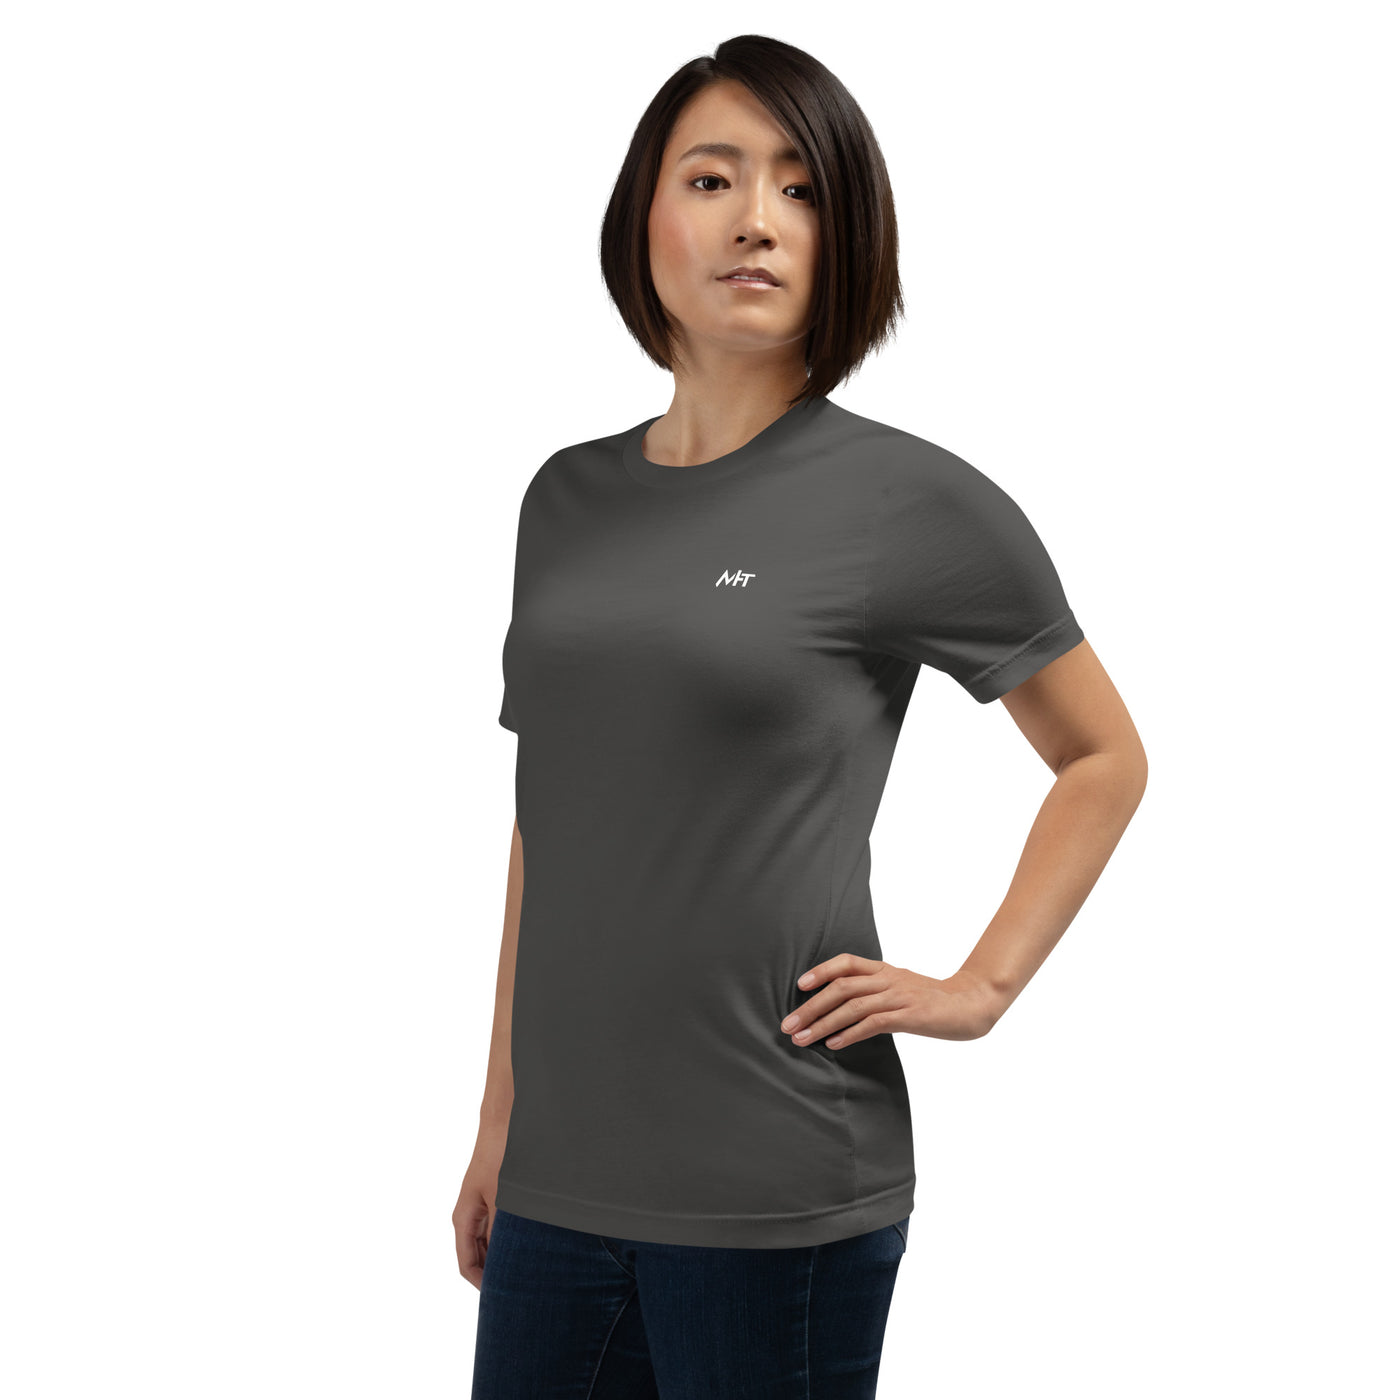 Ape together strong - Unisex t-shirt ( Back Print )